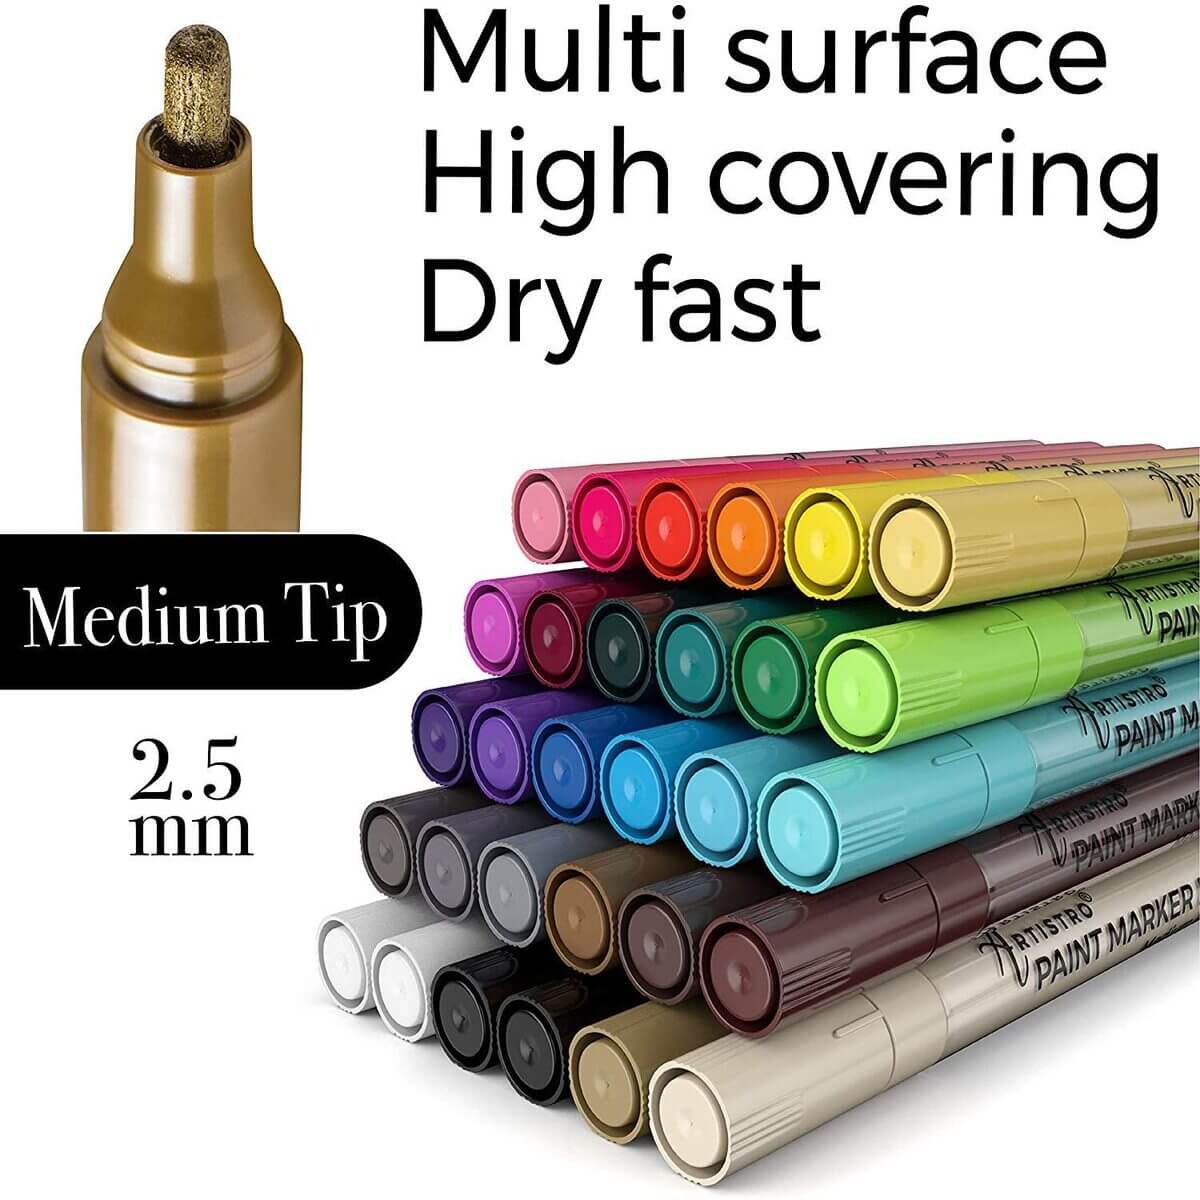 Extra Fine Tip glitter paint pen - Set of 12 glitter markers